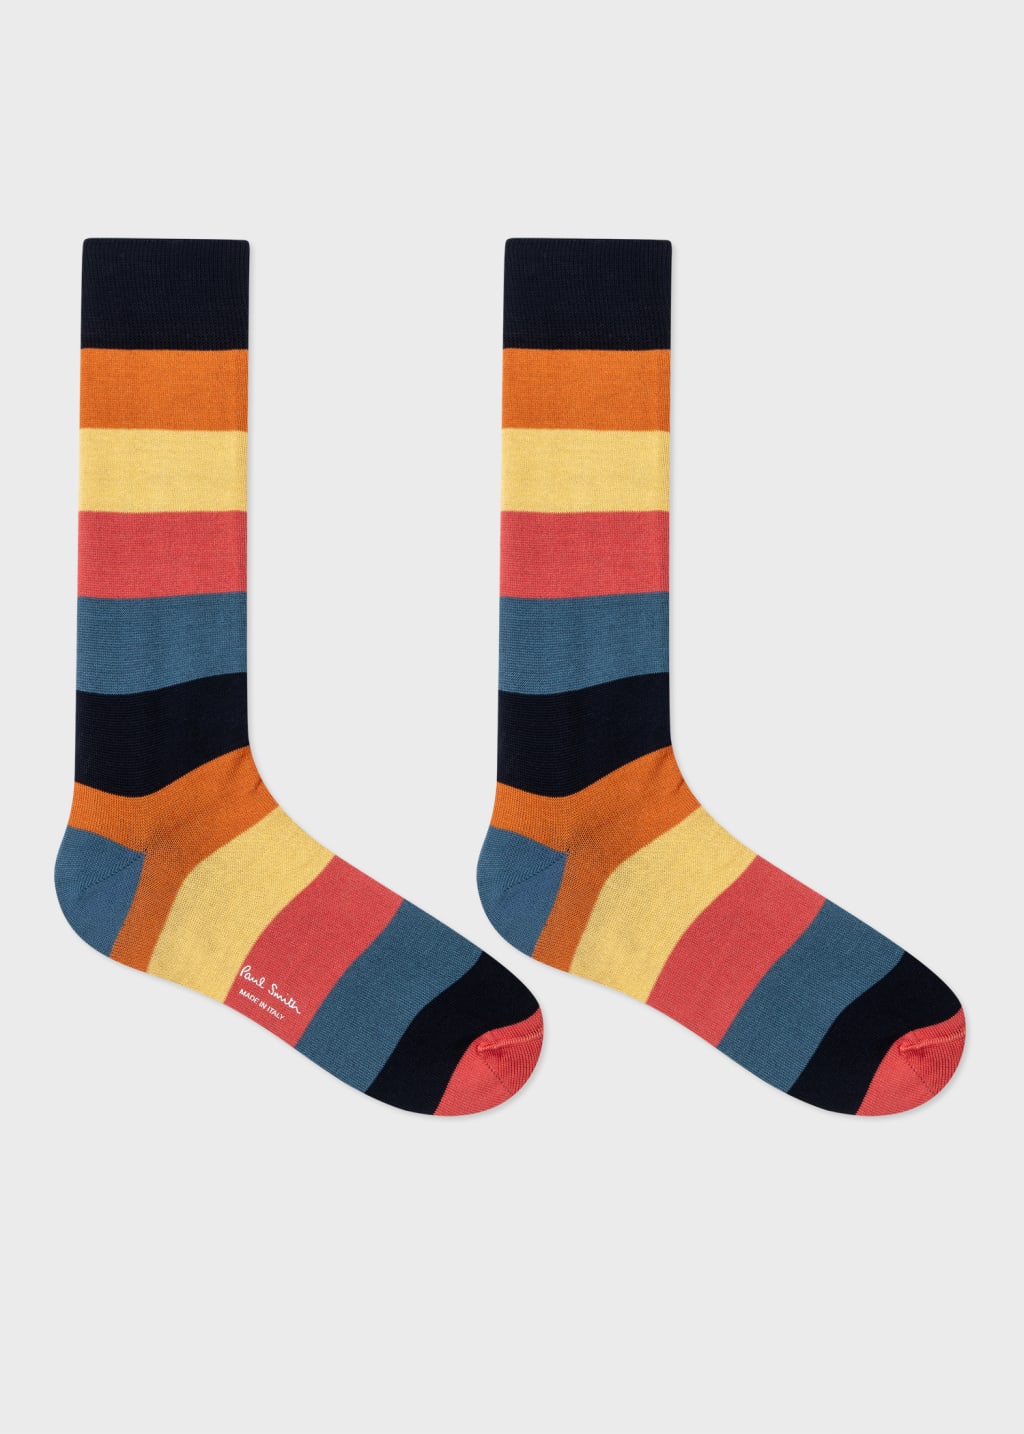 Pair View - Stripe Socks Three Pack Paul Smith